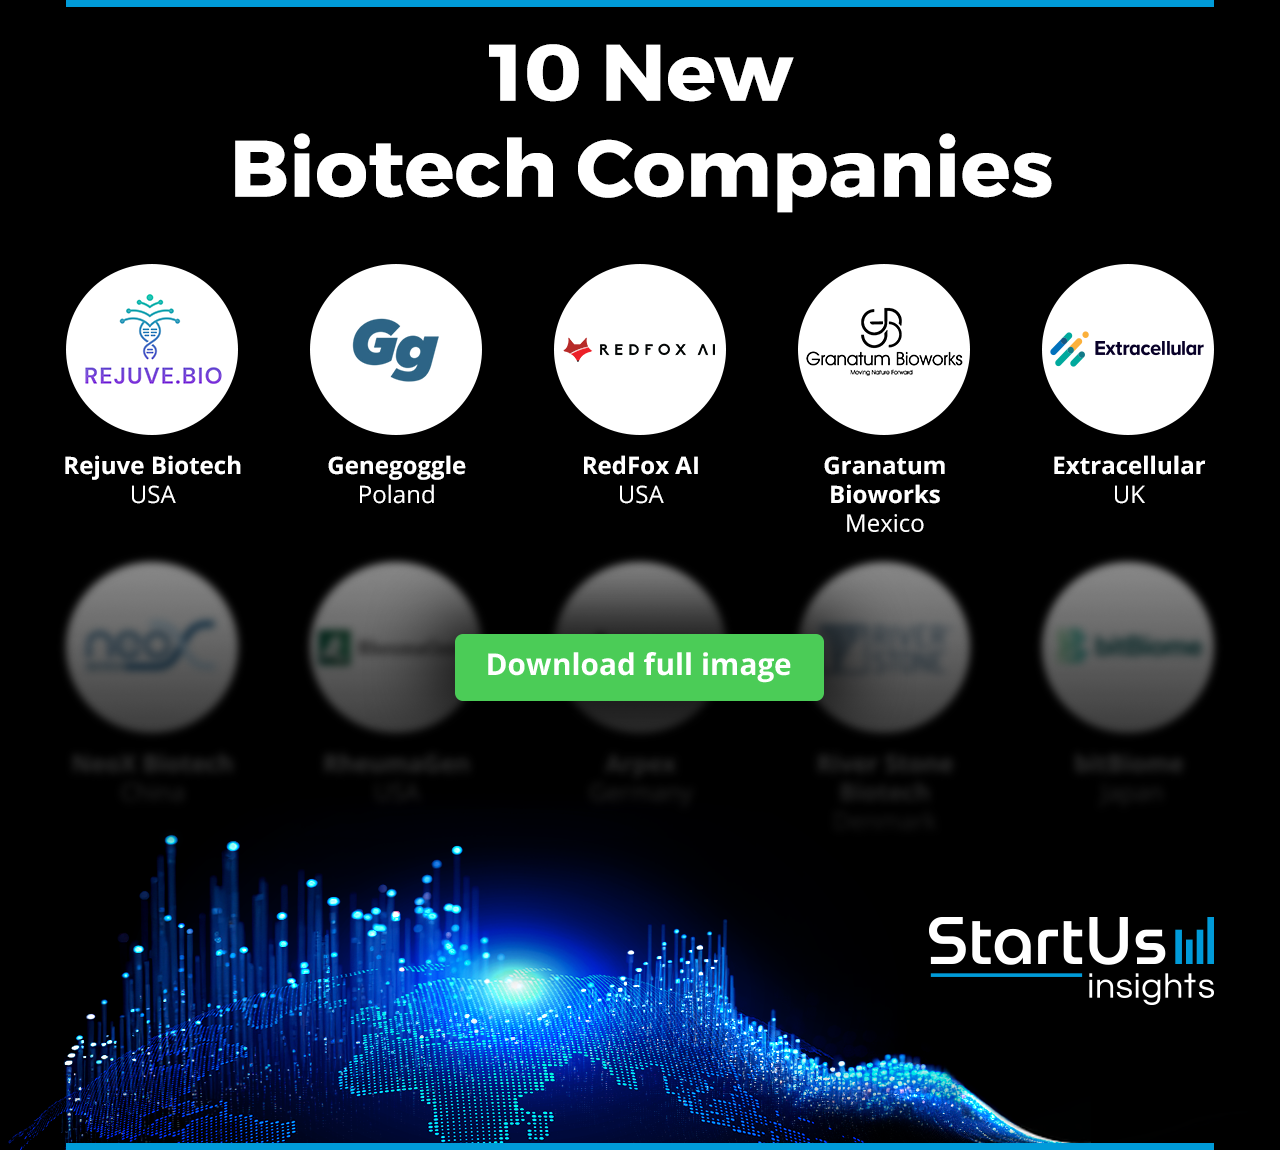 New-Biotech-Companies-Logos-Blurred-StartUs-Insights-noresize